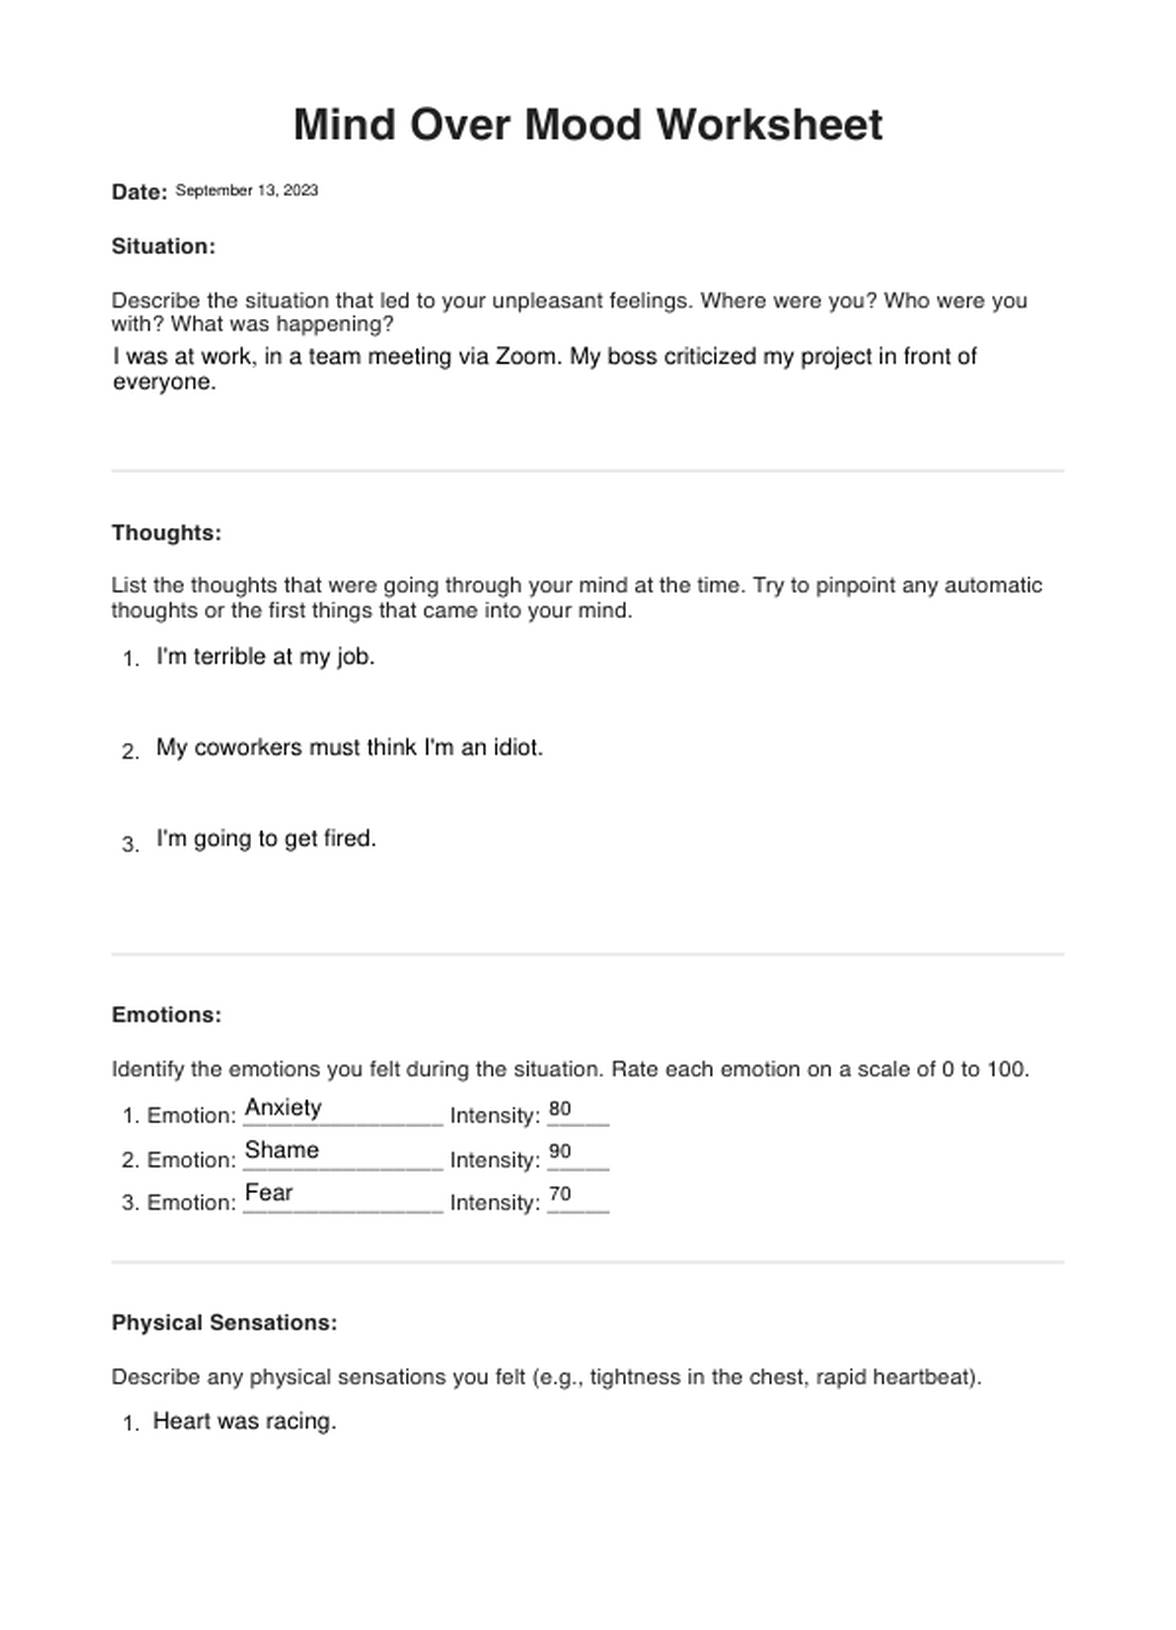 Mind Over Mood Worksheets PDF Example